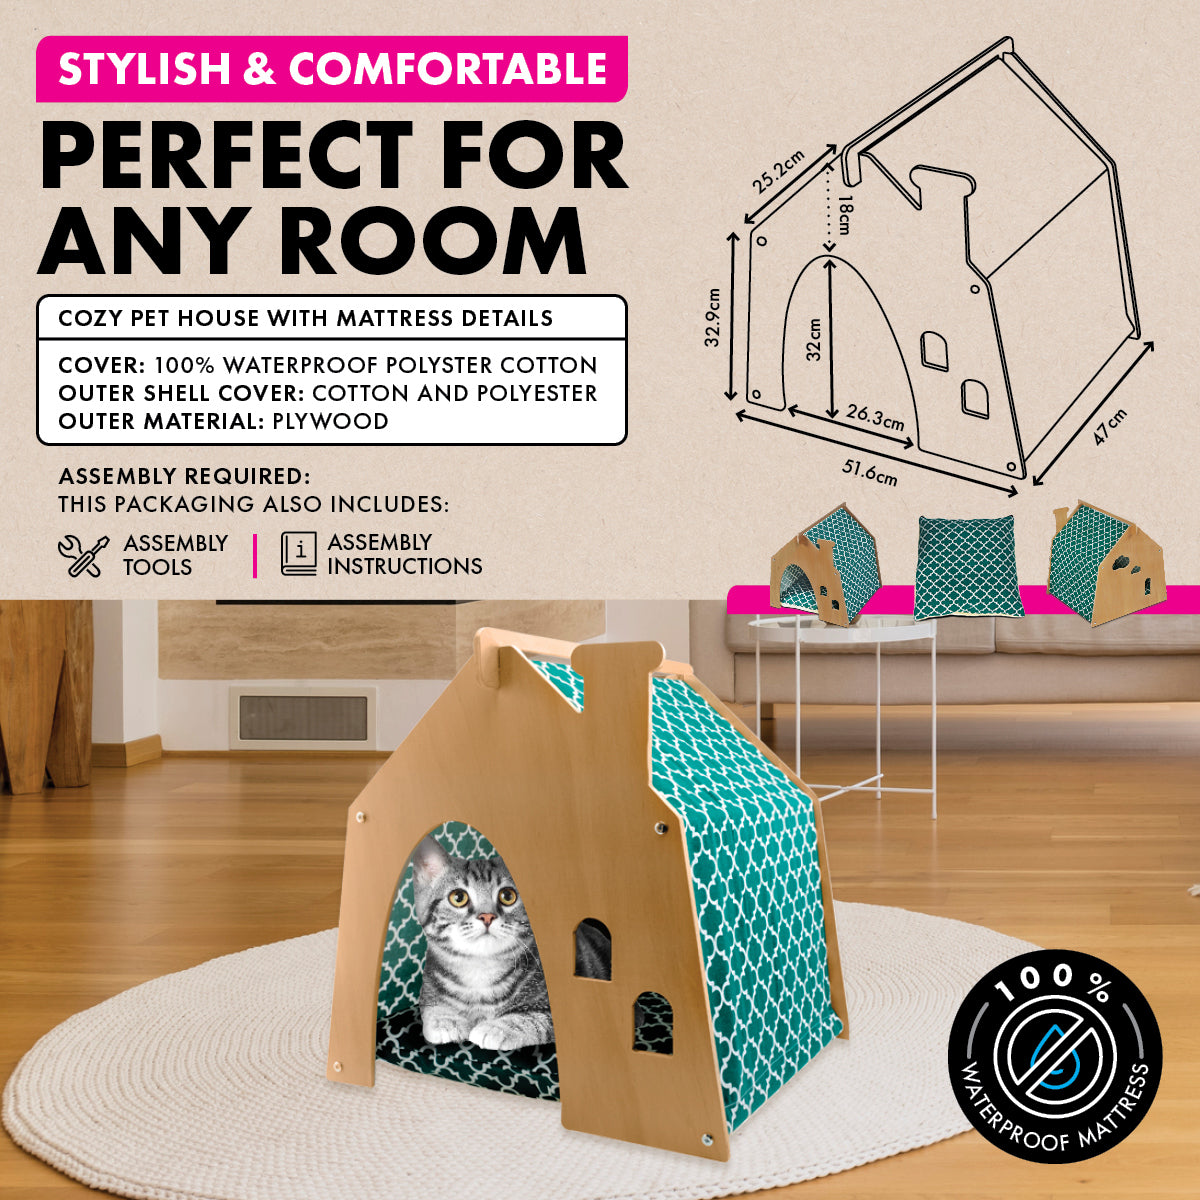 Pet Basic Chimney Cozy Green Cat House Waterproof Mattress 52 x 47cm x 50cm - SILBERSHELL